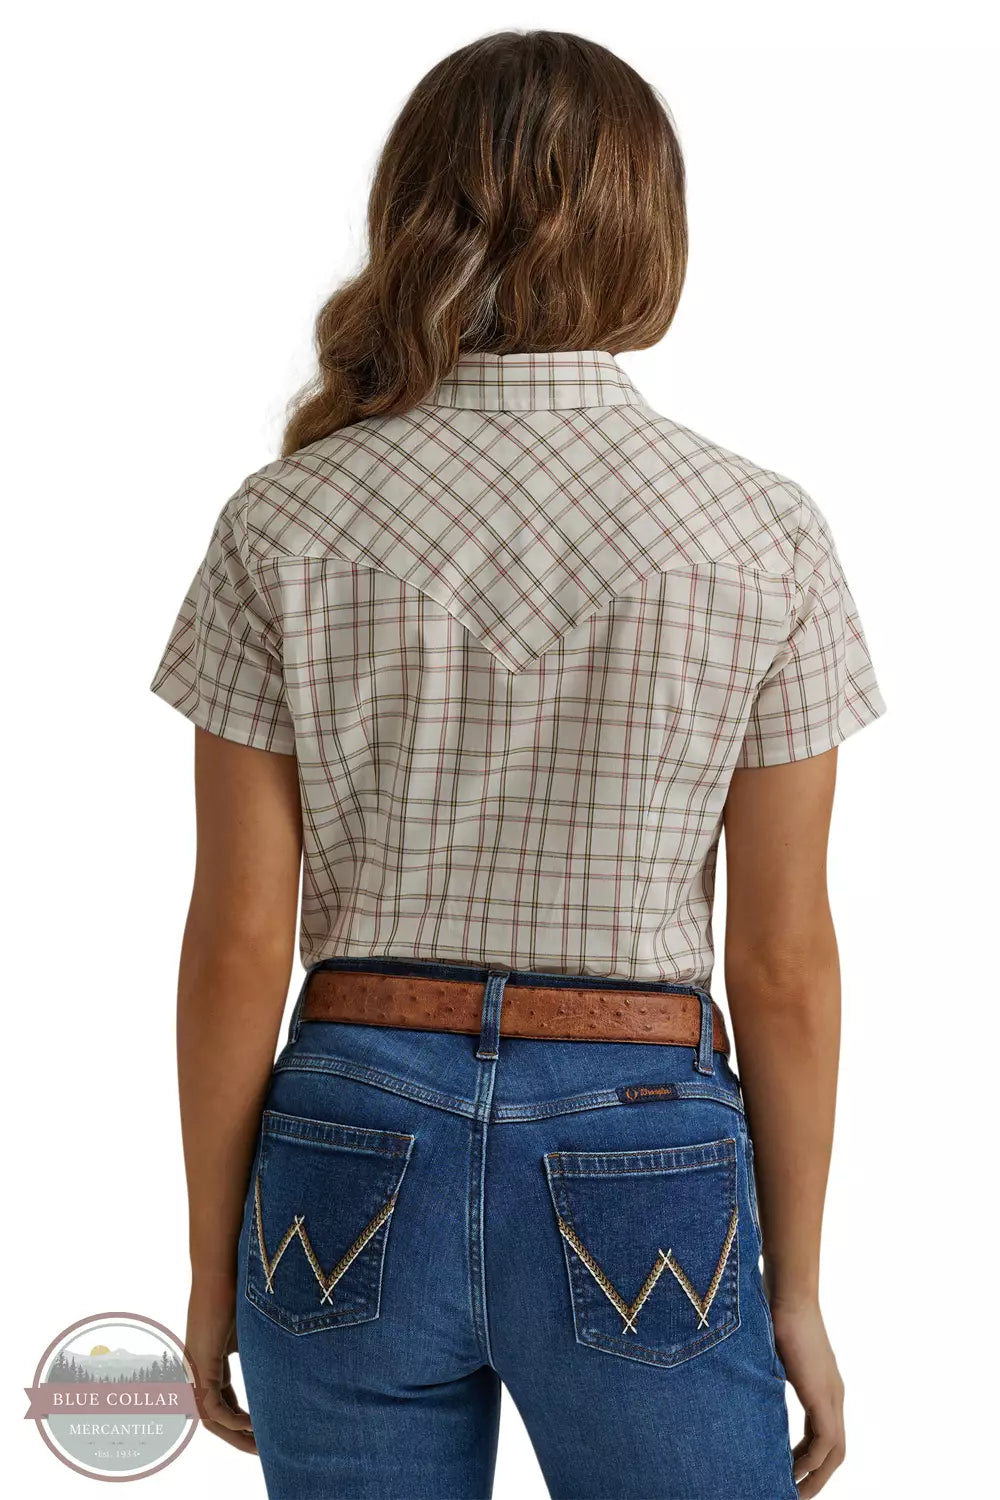 Wrangler 112344663 Essential Plaid Short Sleeve Snap Shirt in Cream Plaid Back View